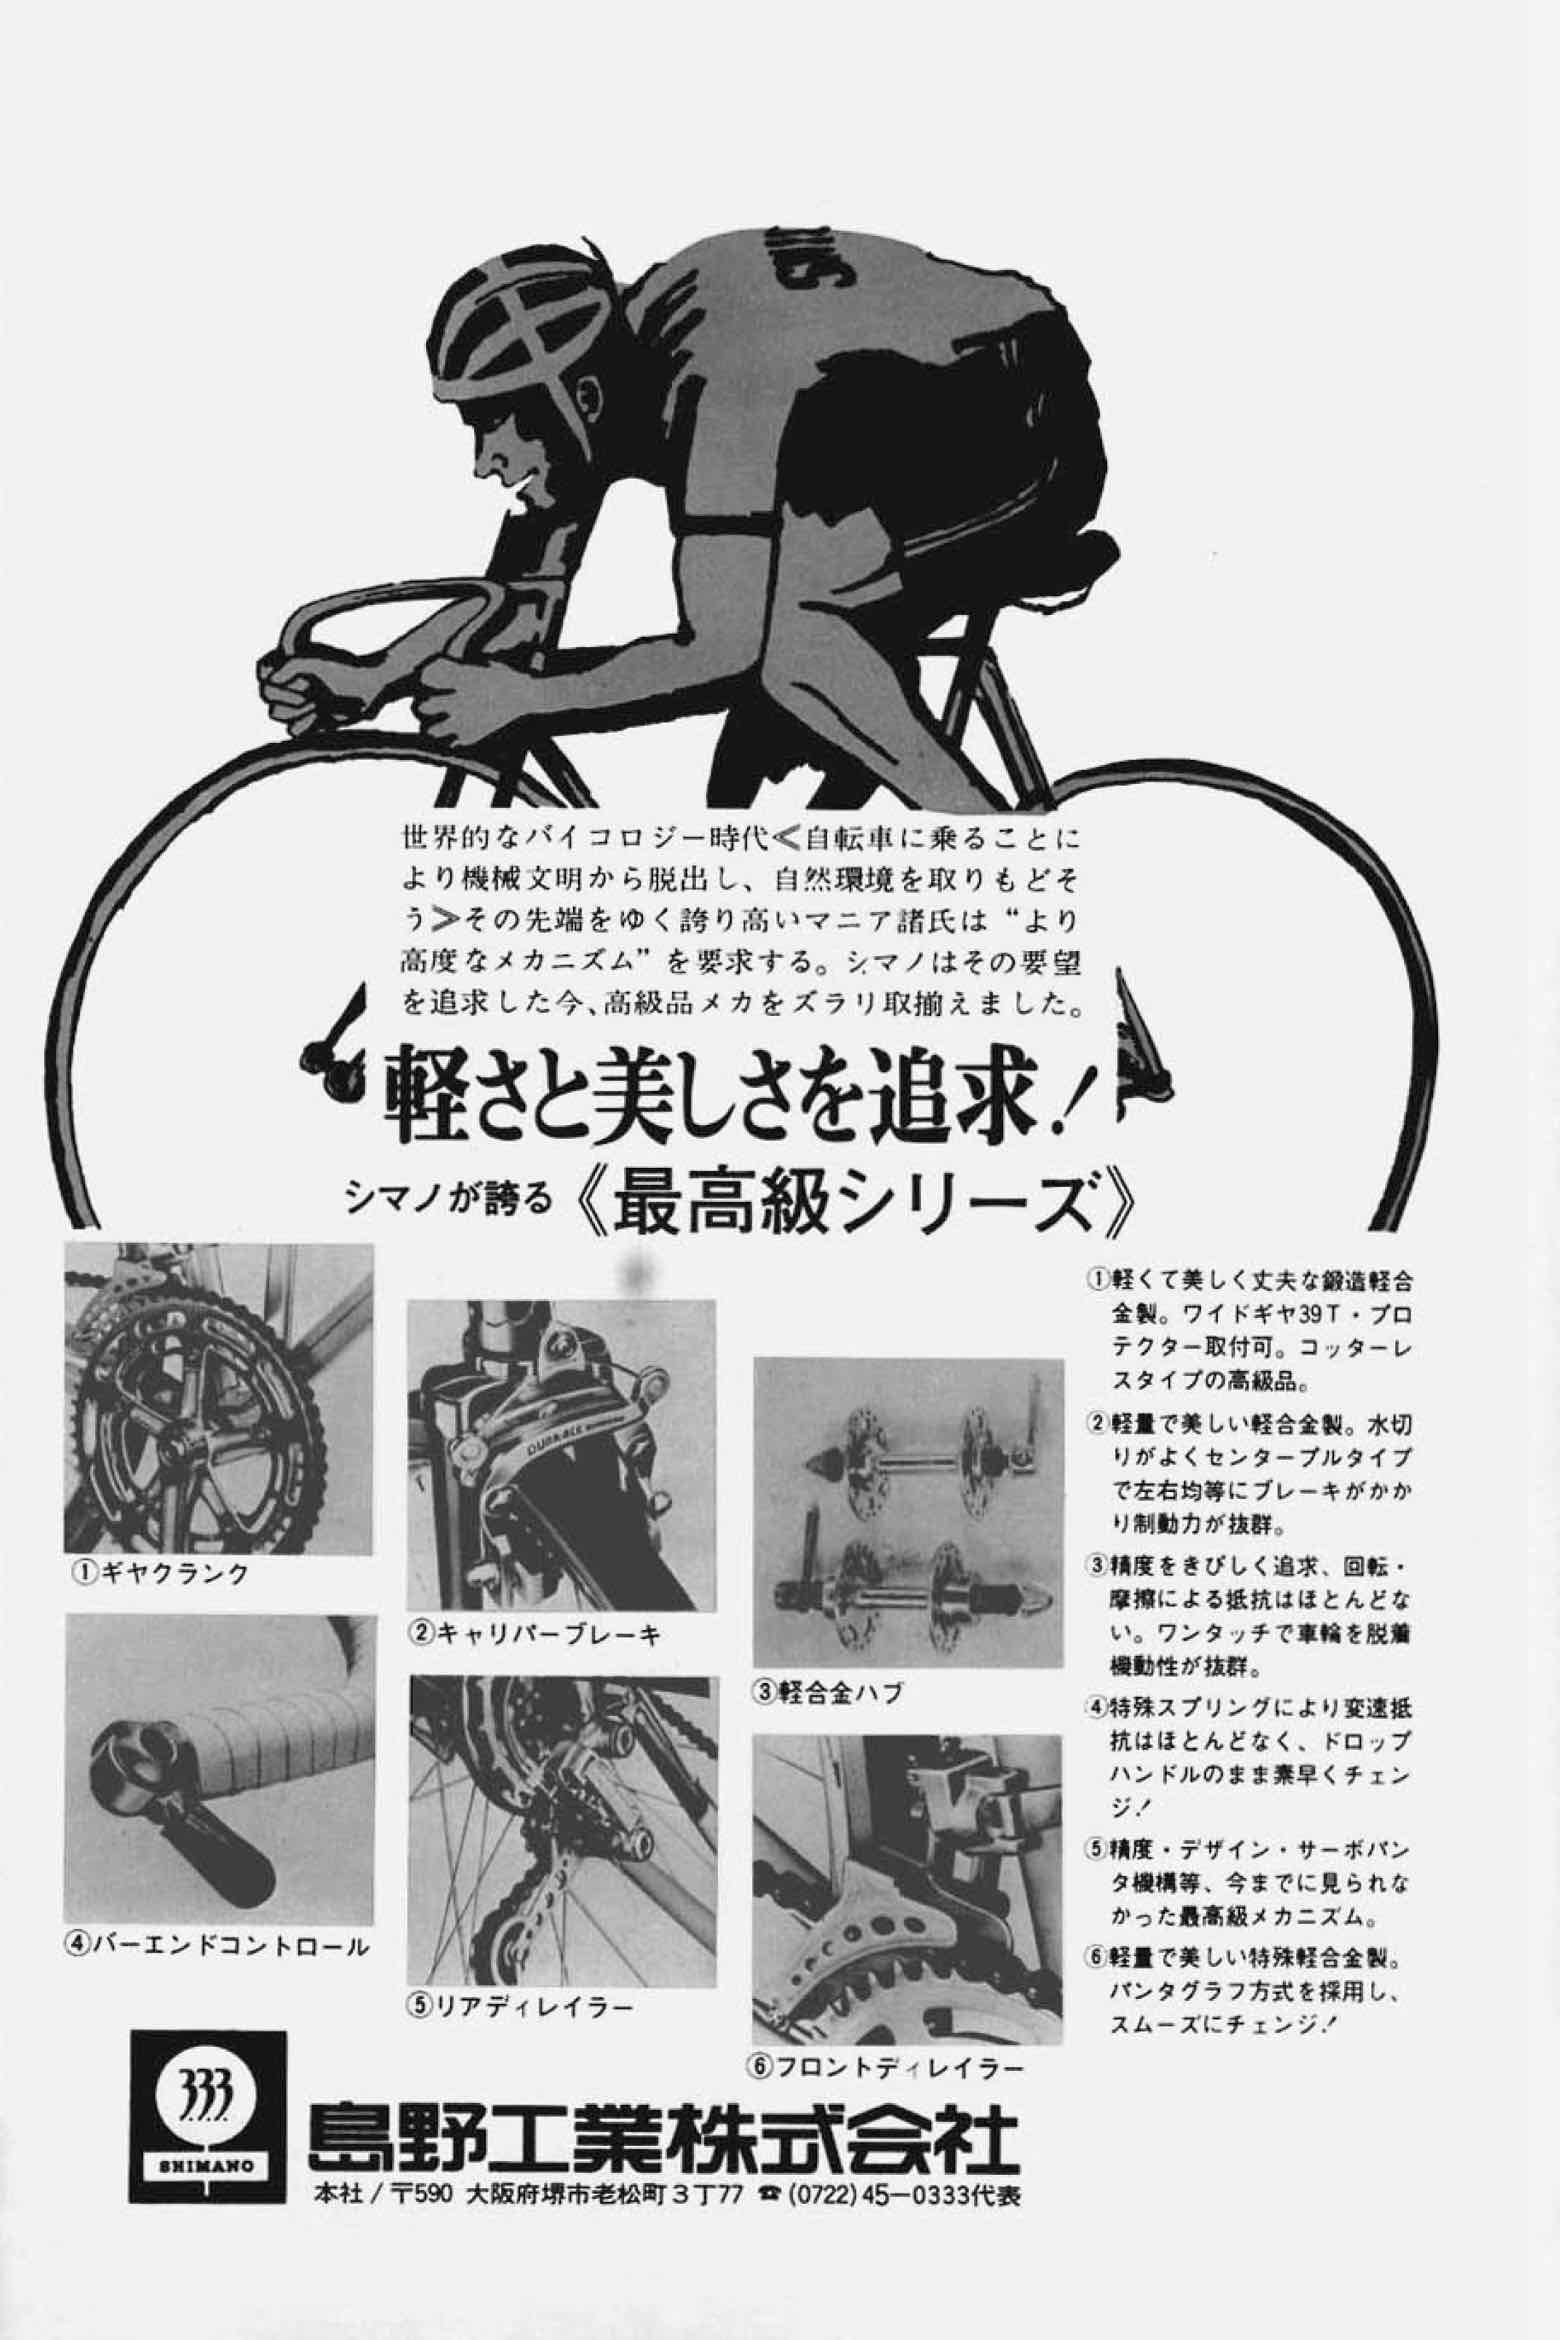 New Cycling August 1972 - Shimano advert main image